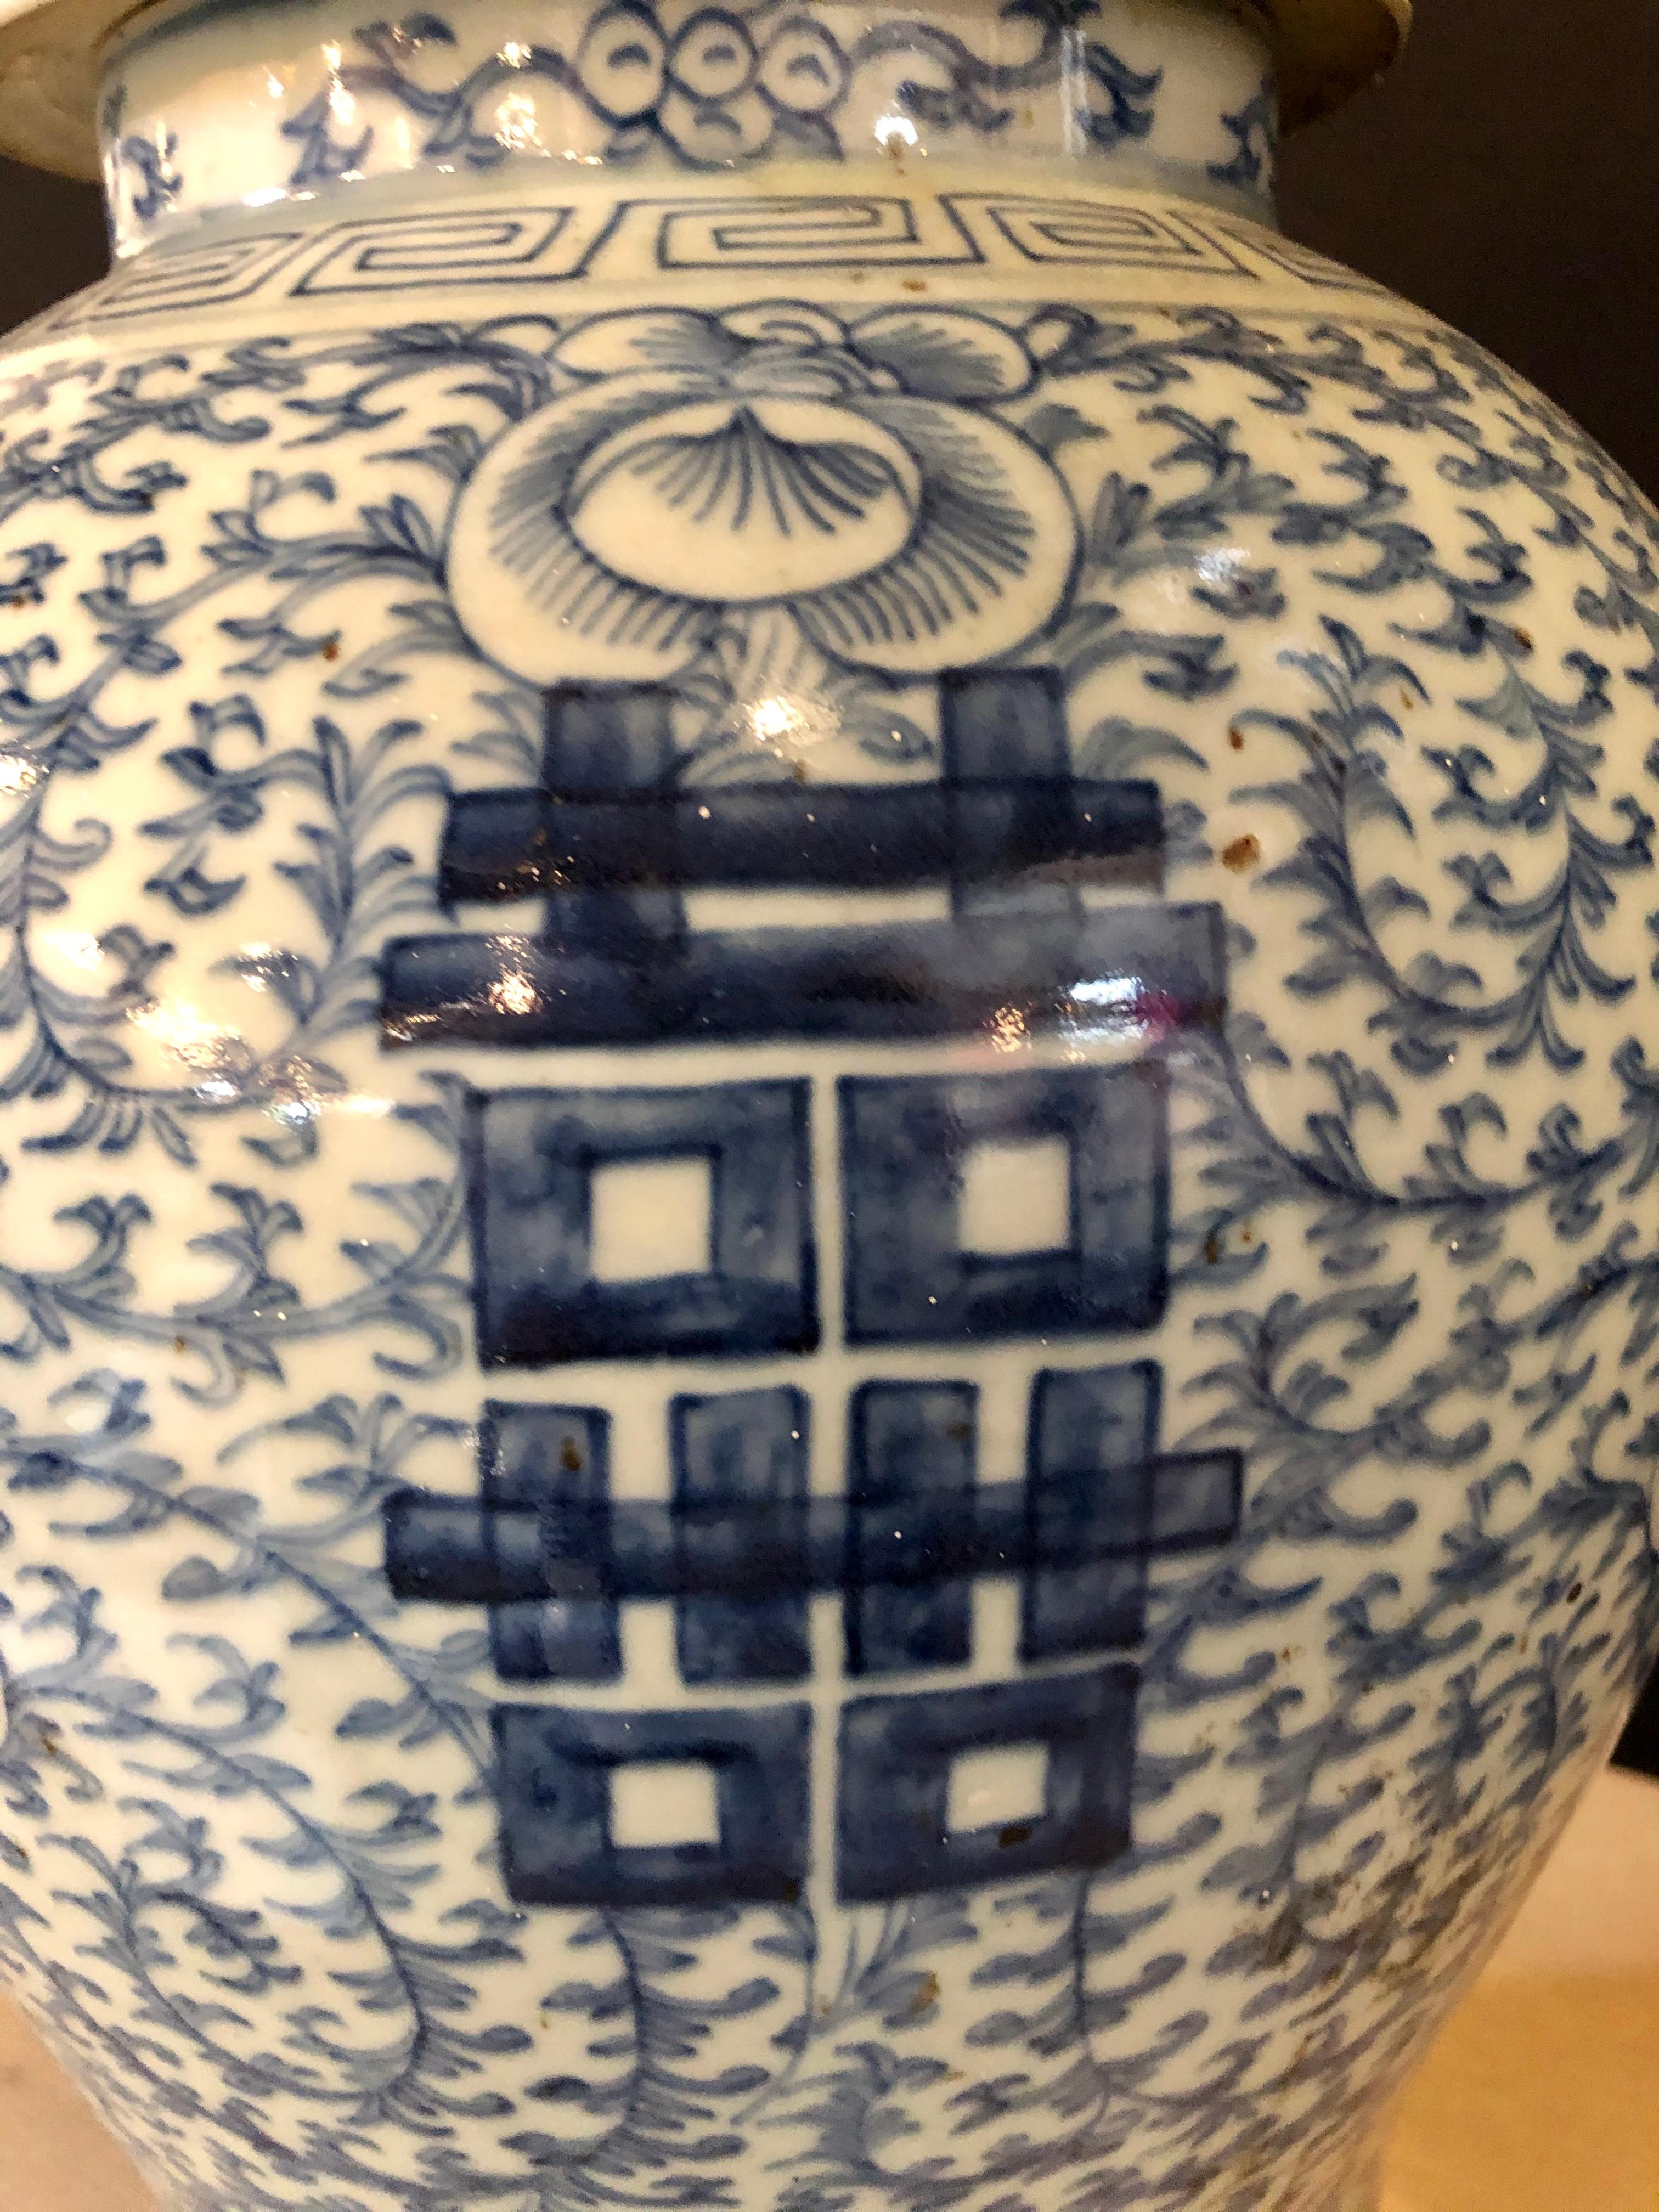 Chinese Export Blue and White Chinese Lidded Ginger Jar, Vase or Urn, Signed on Bottom